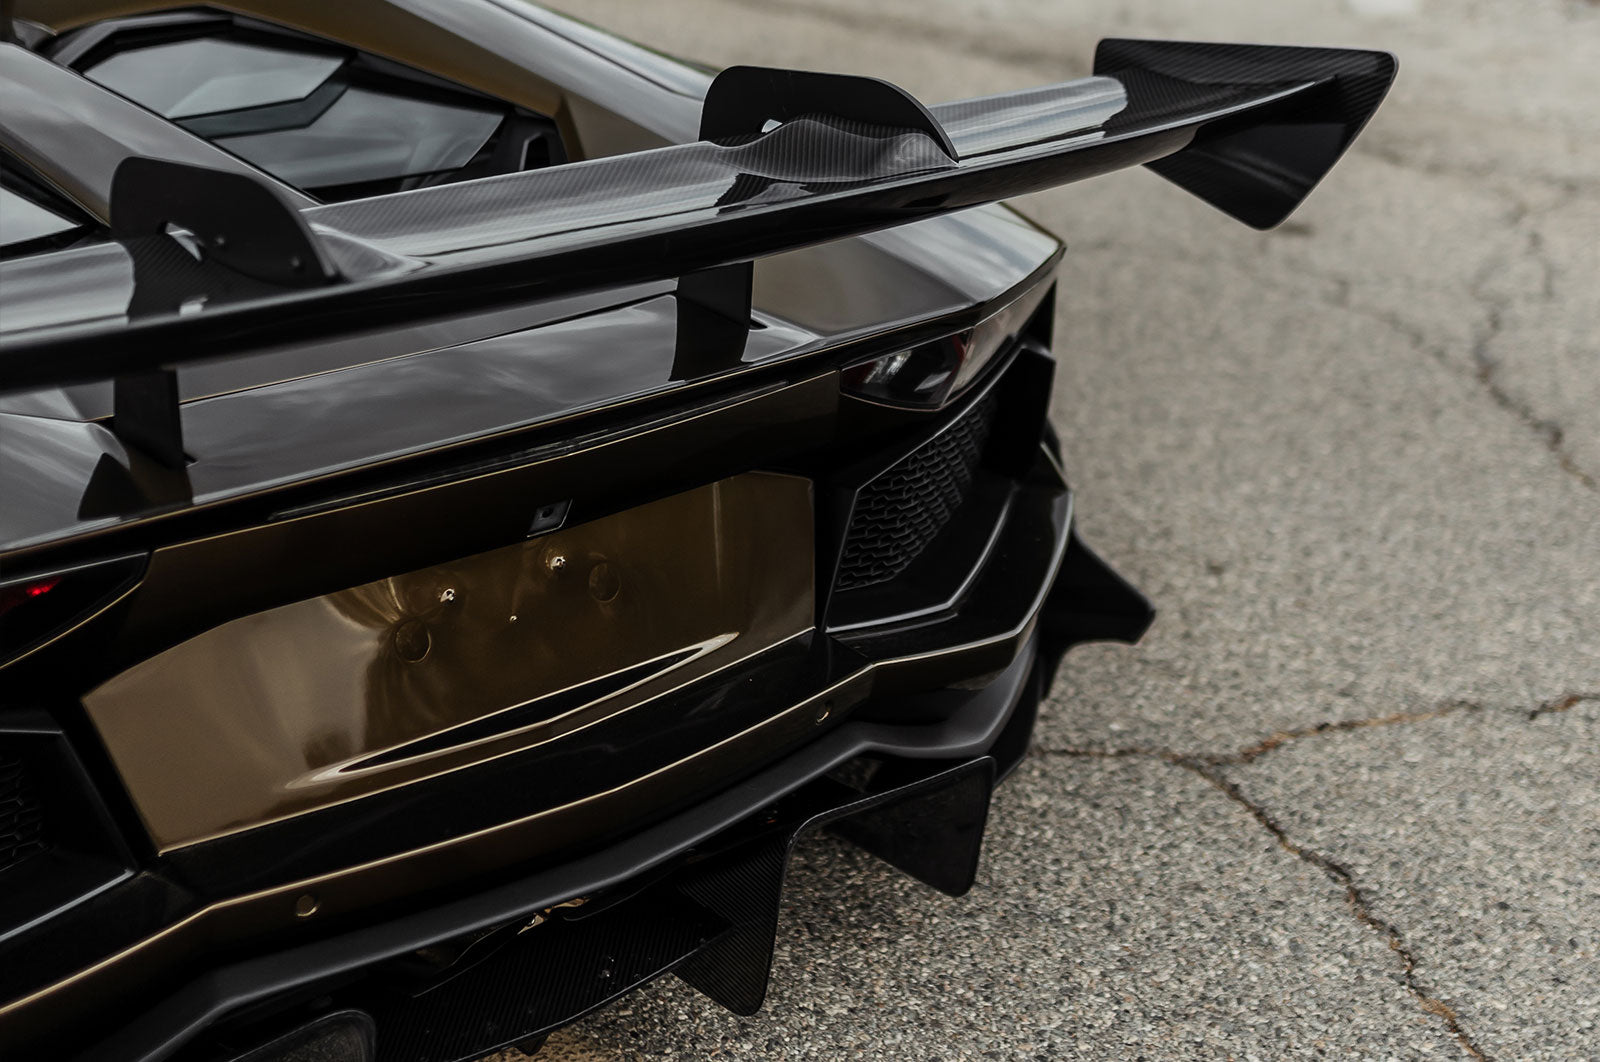 Lamborghini Aventador - Supergloss Metallic Midnight Gold